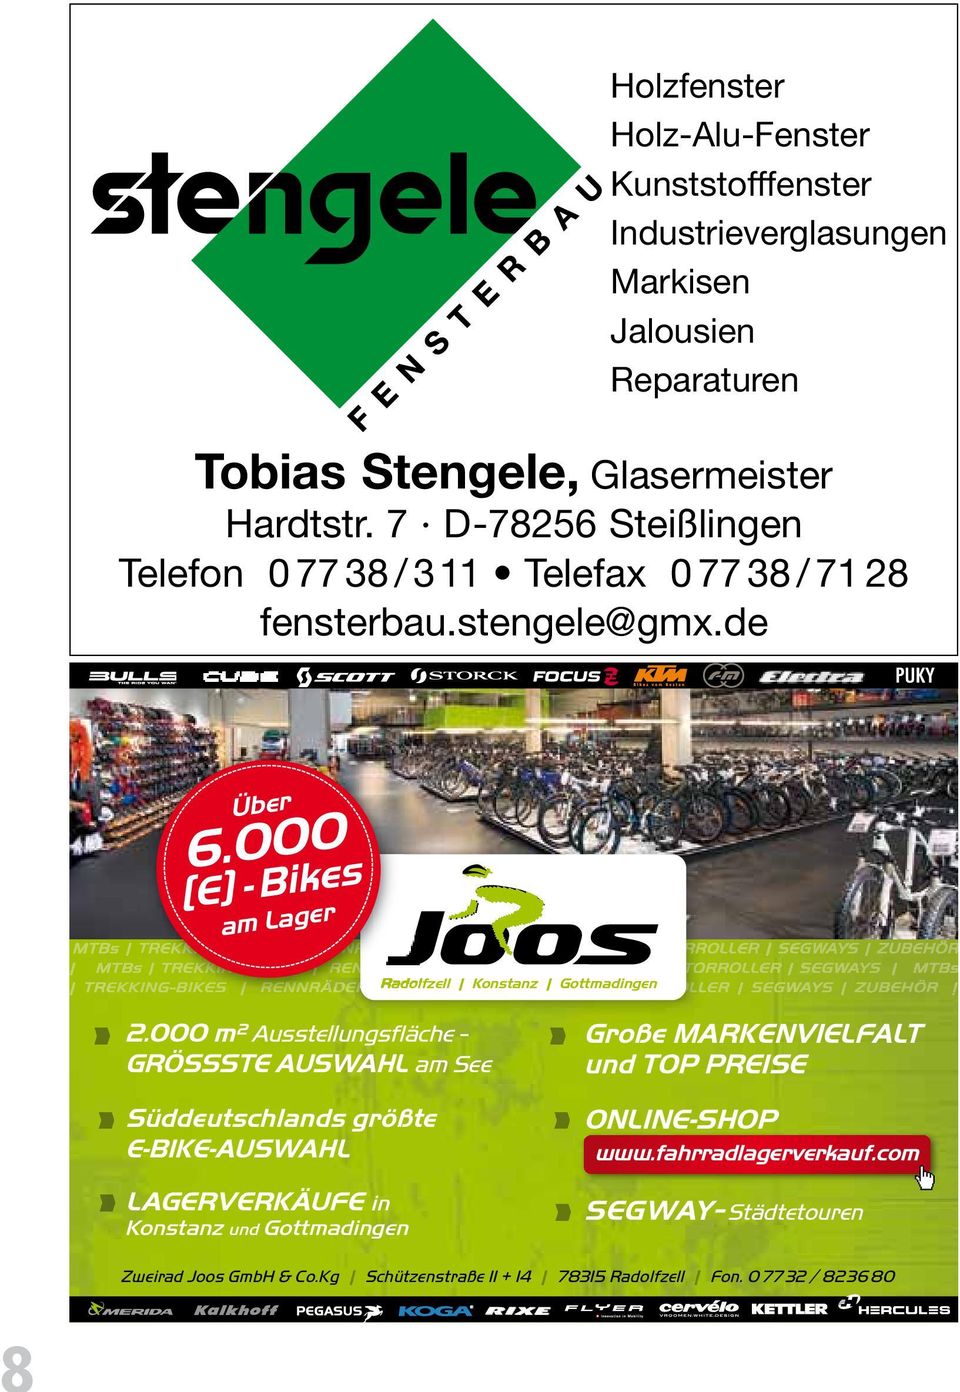 000 [E] - Bikes am Lager Radolfzell Konstanz Gottmadingen 2.